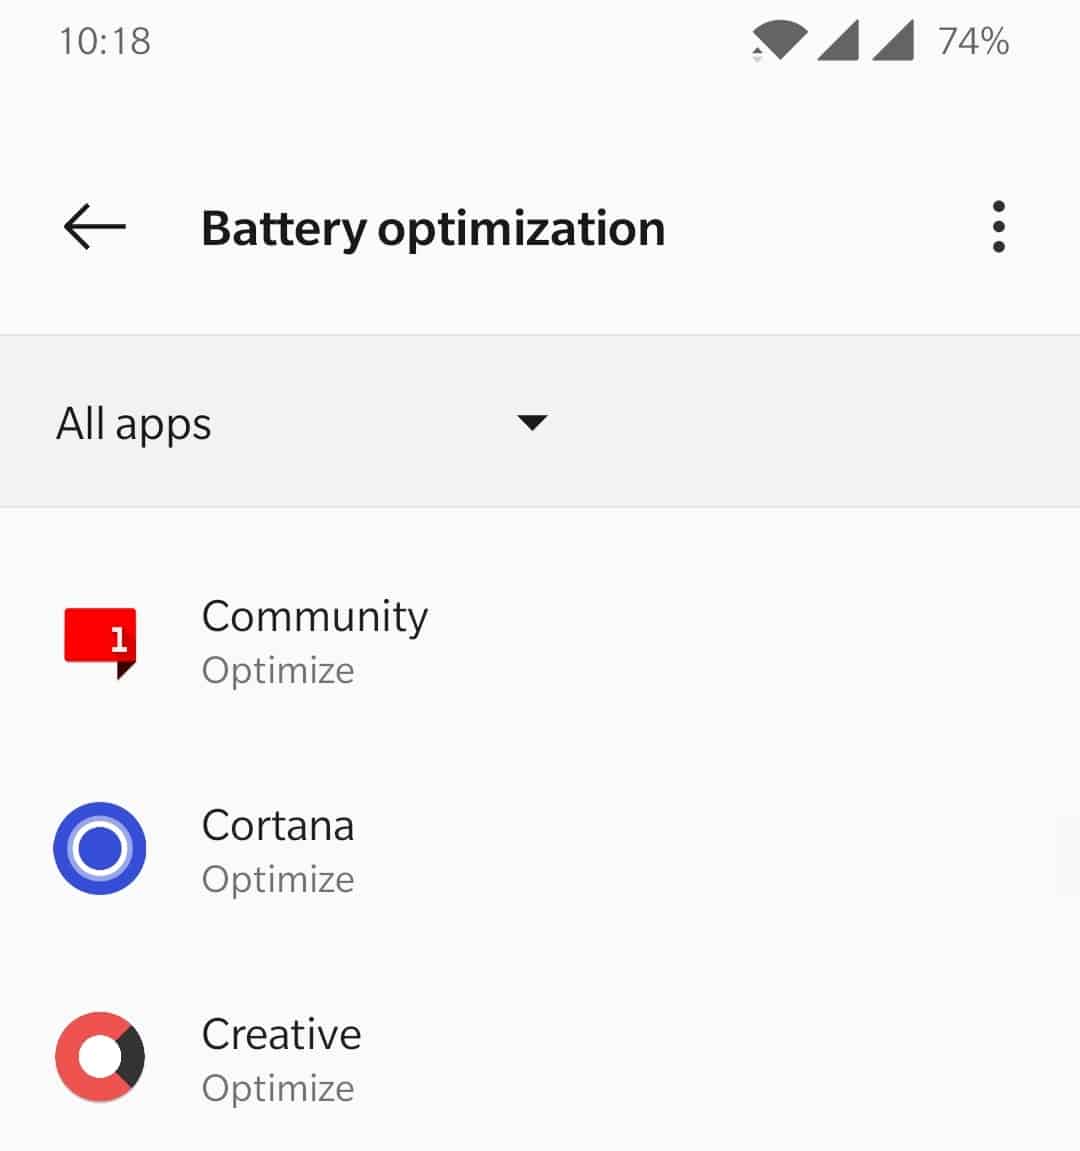 Cortana Battery Optimization - Android